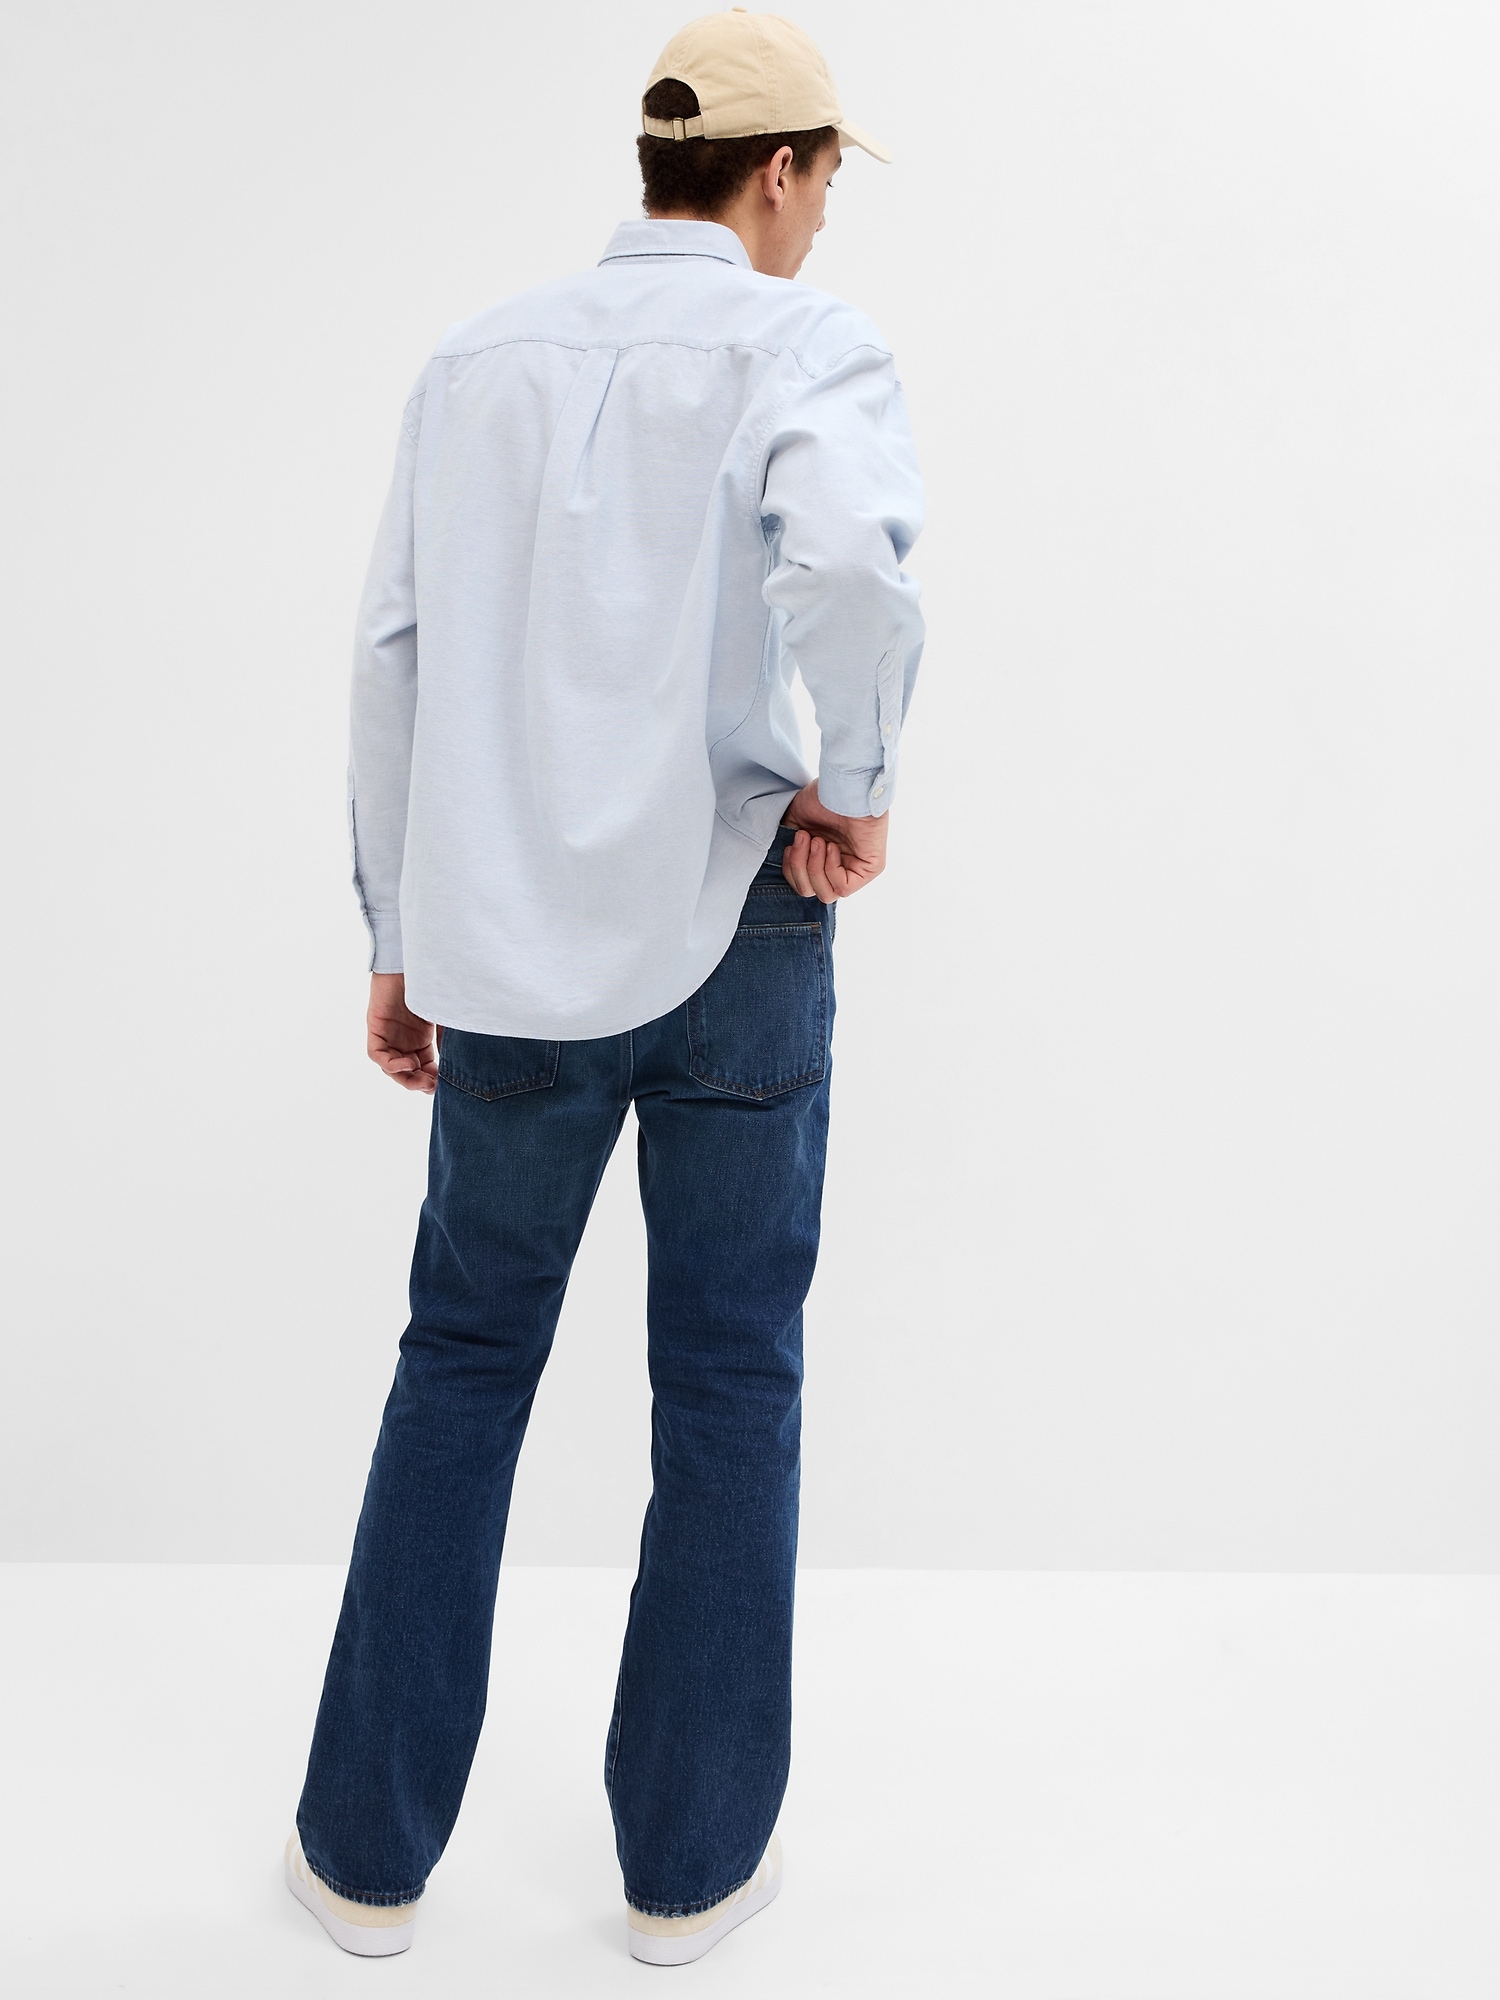 GAP, Jeans, Gap Jeans Stretchbootcut Jean Womens Size 8 Average Denim  Pants 98 Cotton